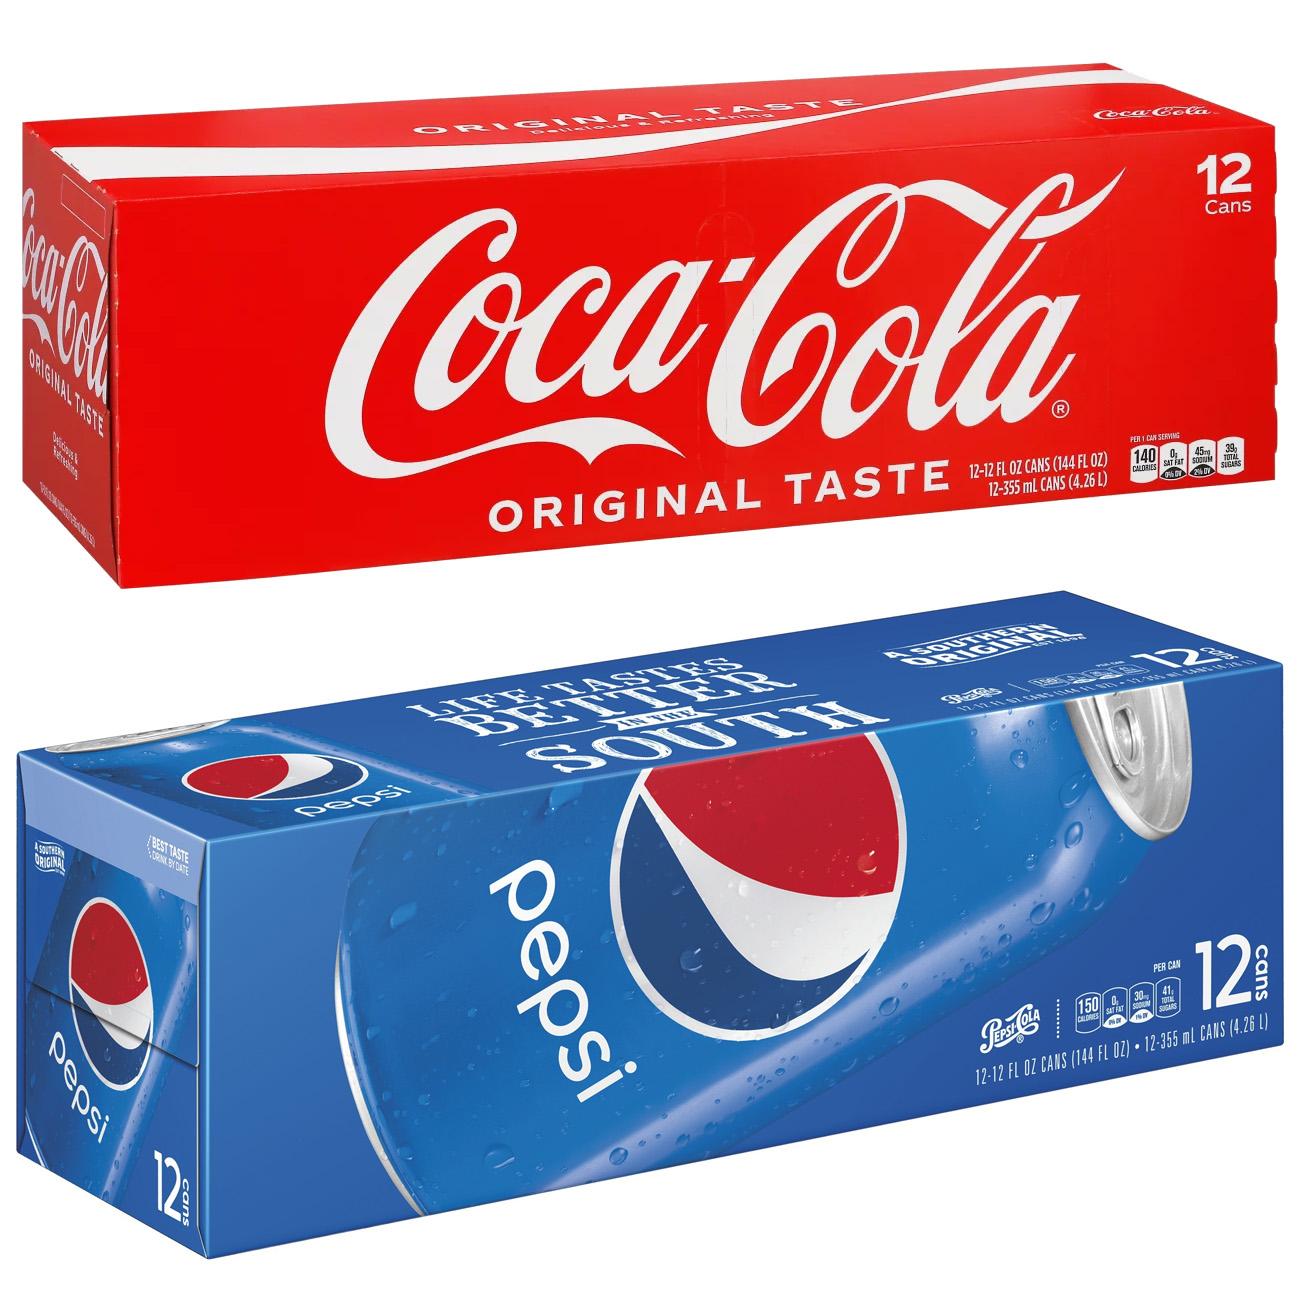 36 Pepsi or Coke for $9.99